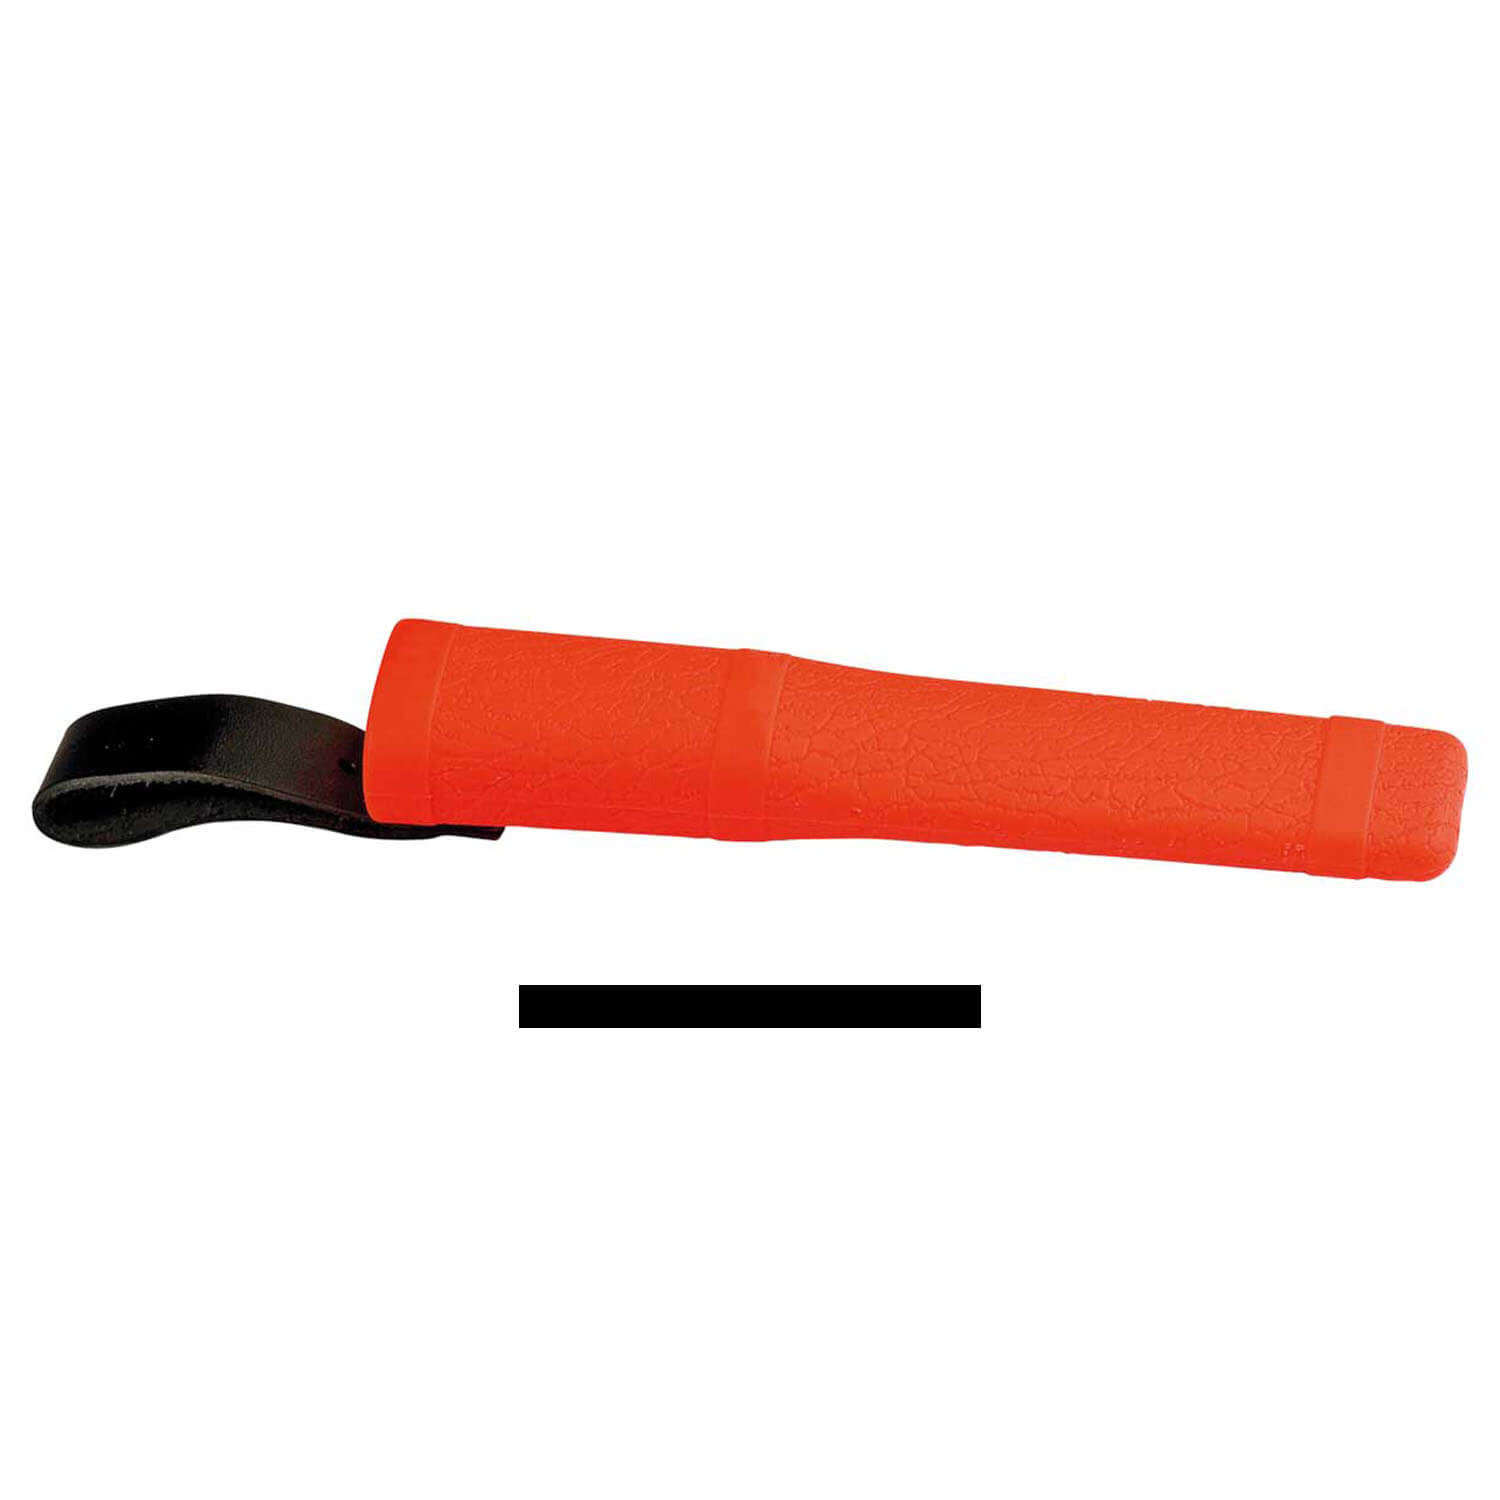 Mora Outdoor 2000 Knife (orange)